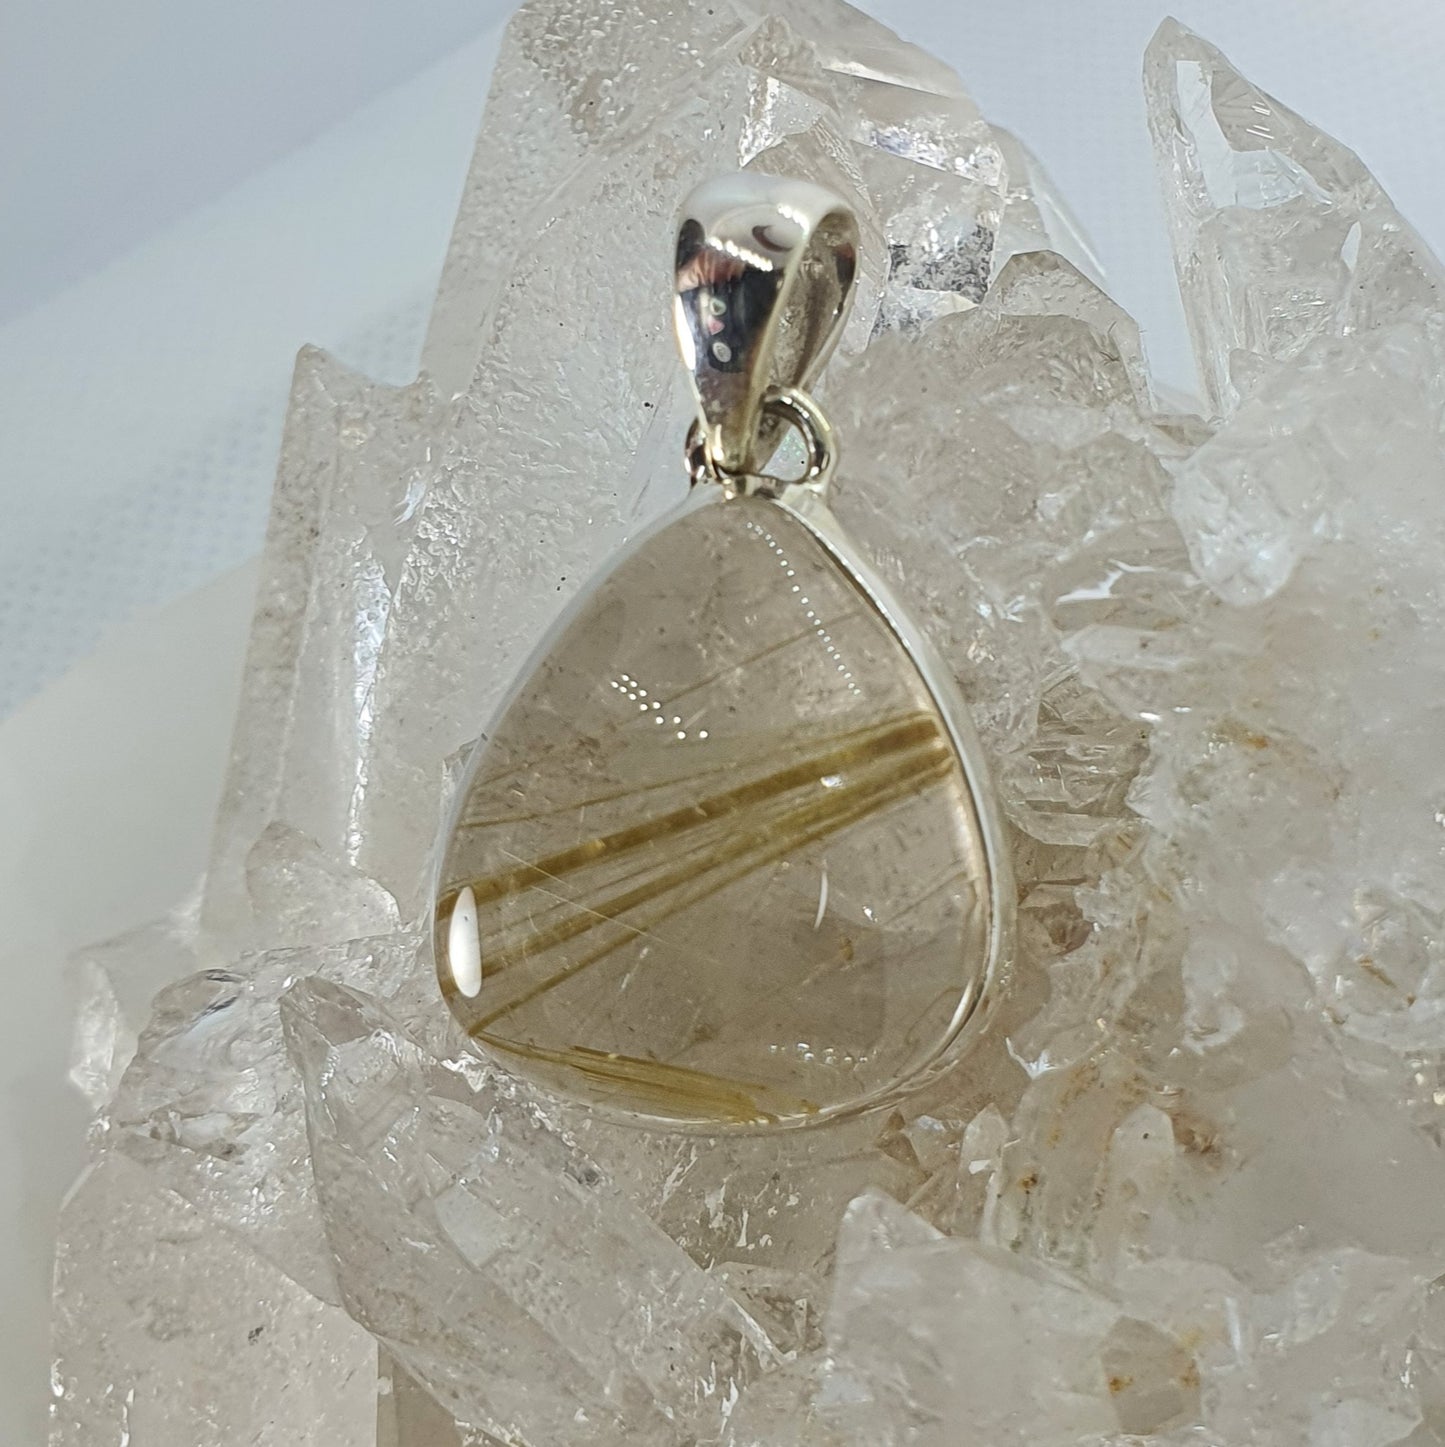 Crystals - Golden Rutile Quartz Cabochon Teardrop Pendant - Sterling Silver